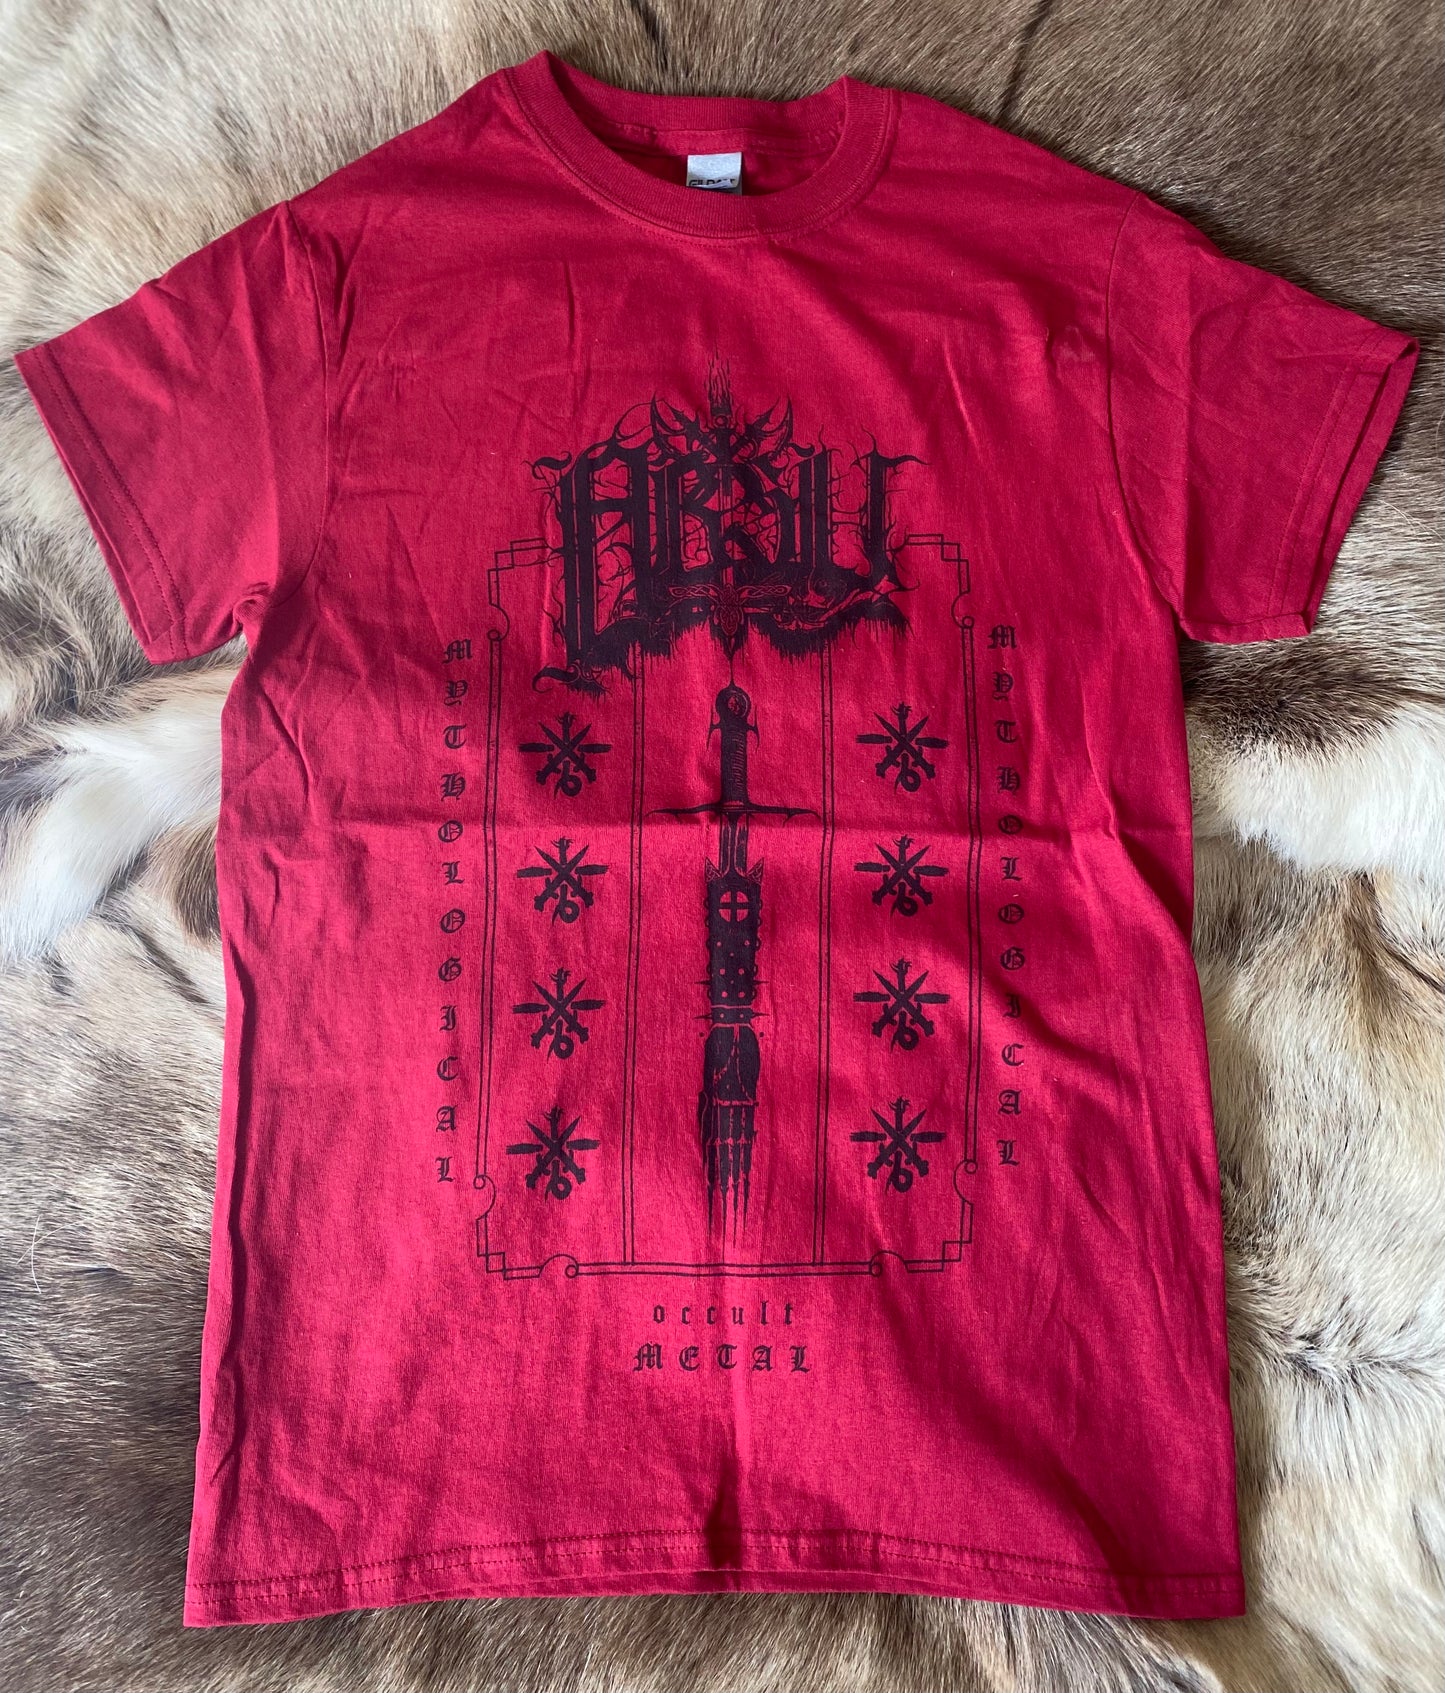 Absu - Mythological Occult Metal Short Sleeved T-shirt